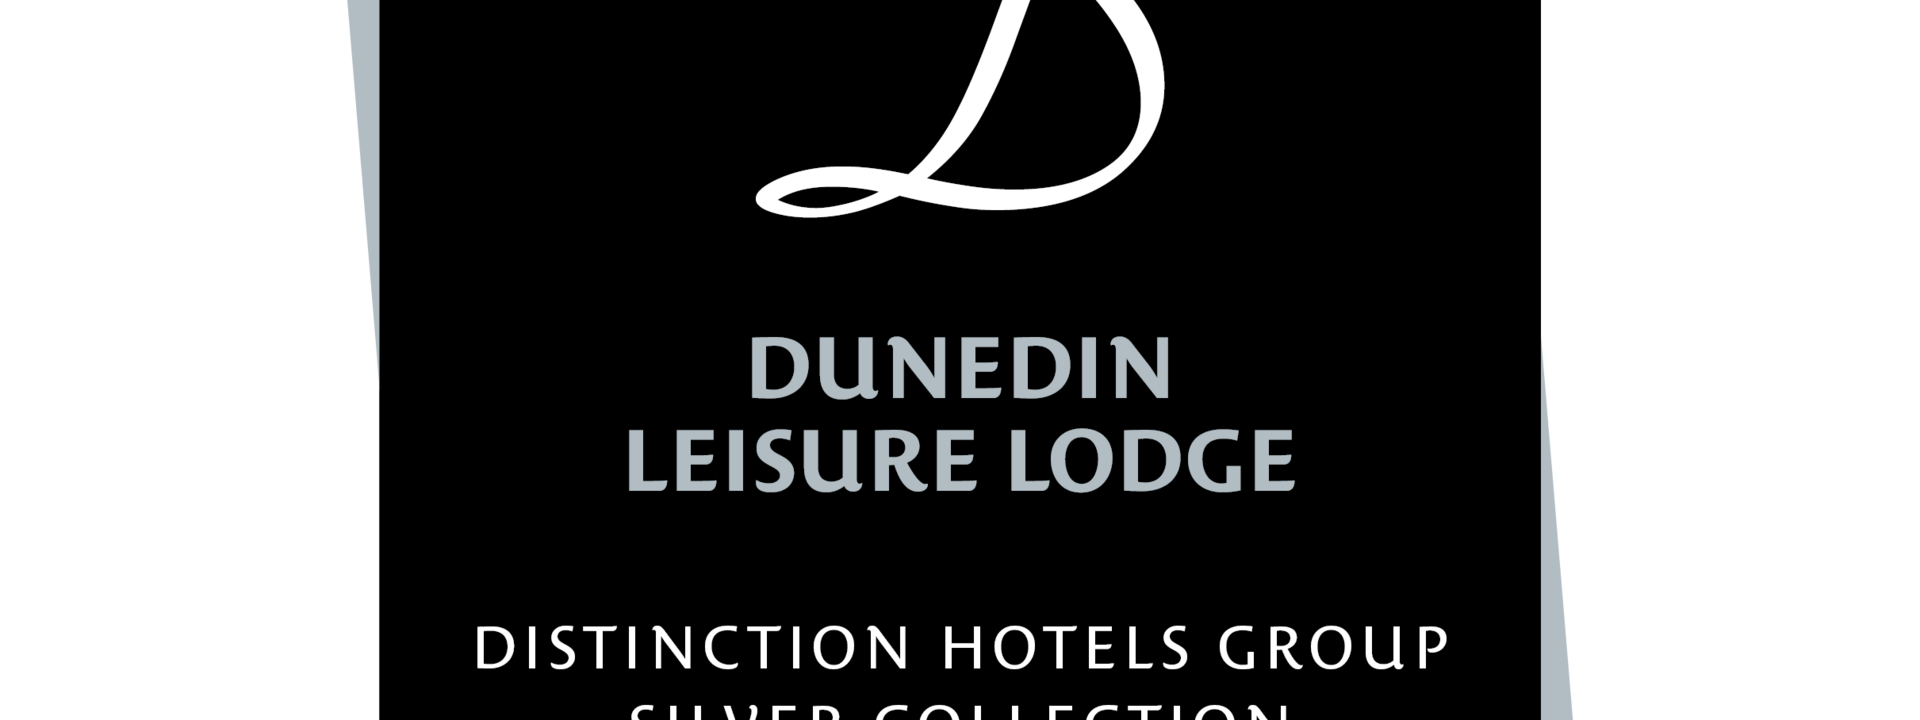 Dunedin Leisure Lodge Logo4 PNG.png